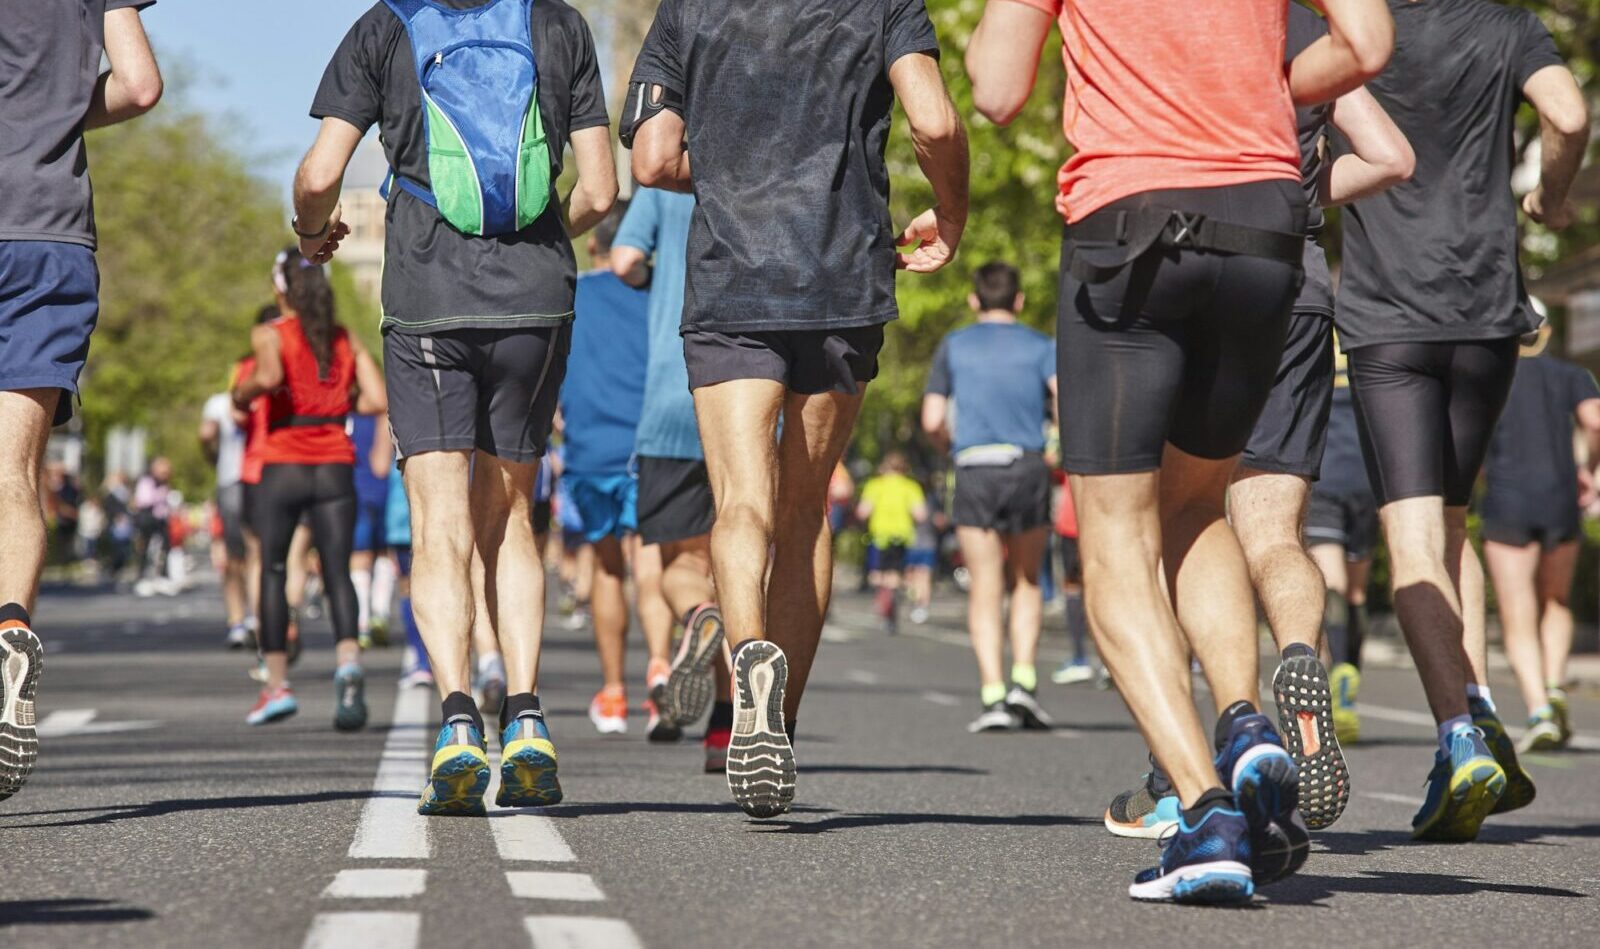 Marathon runners on the street. Healthy lifestyle. Urban athletes